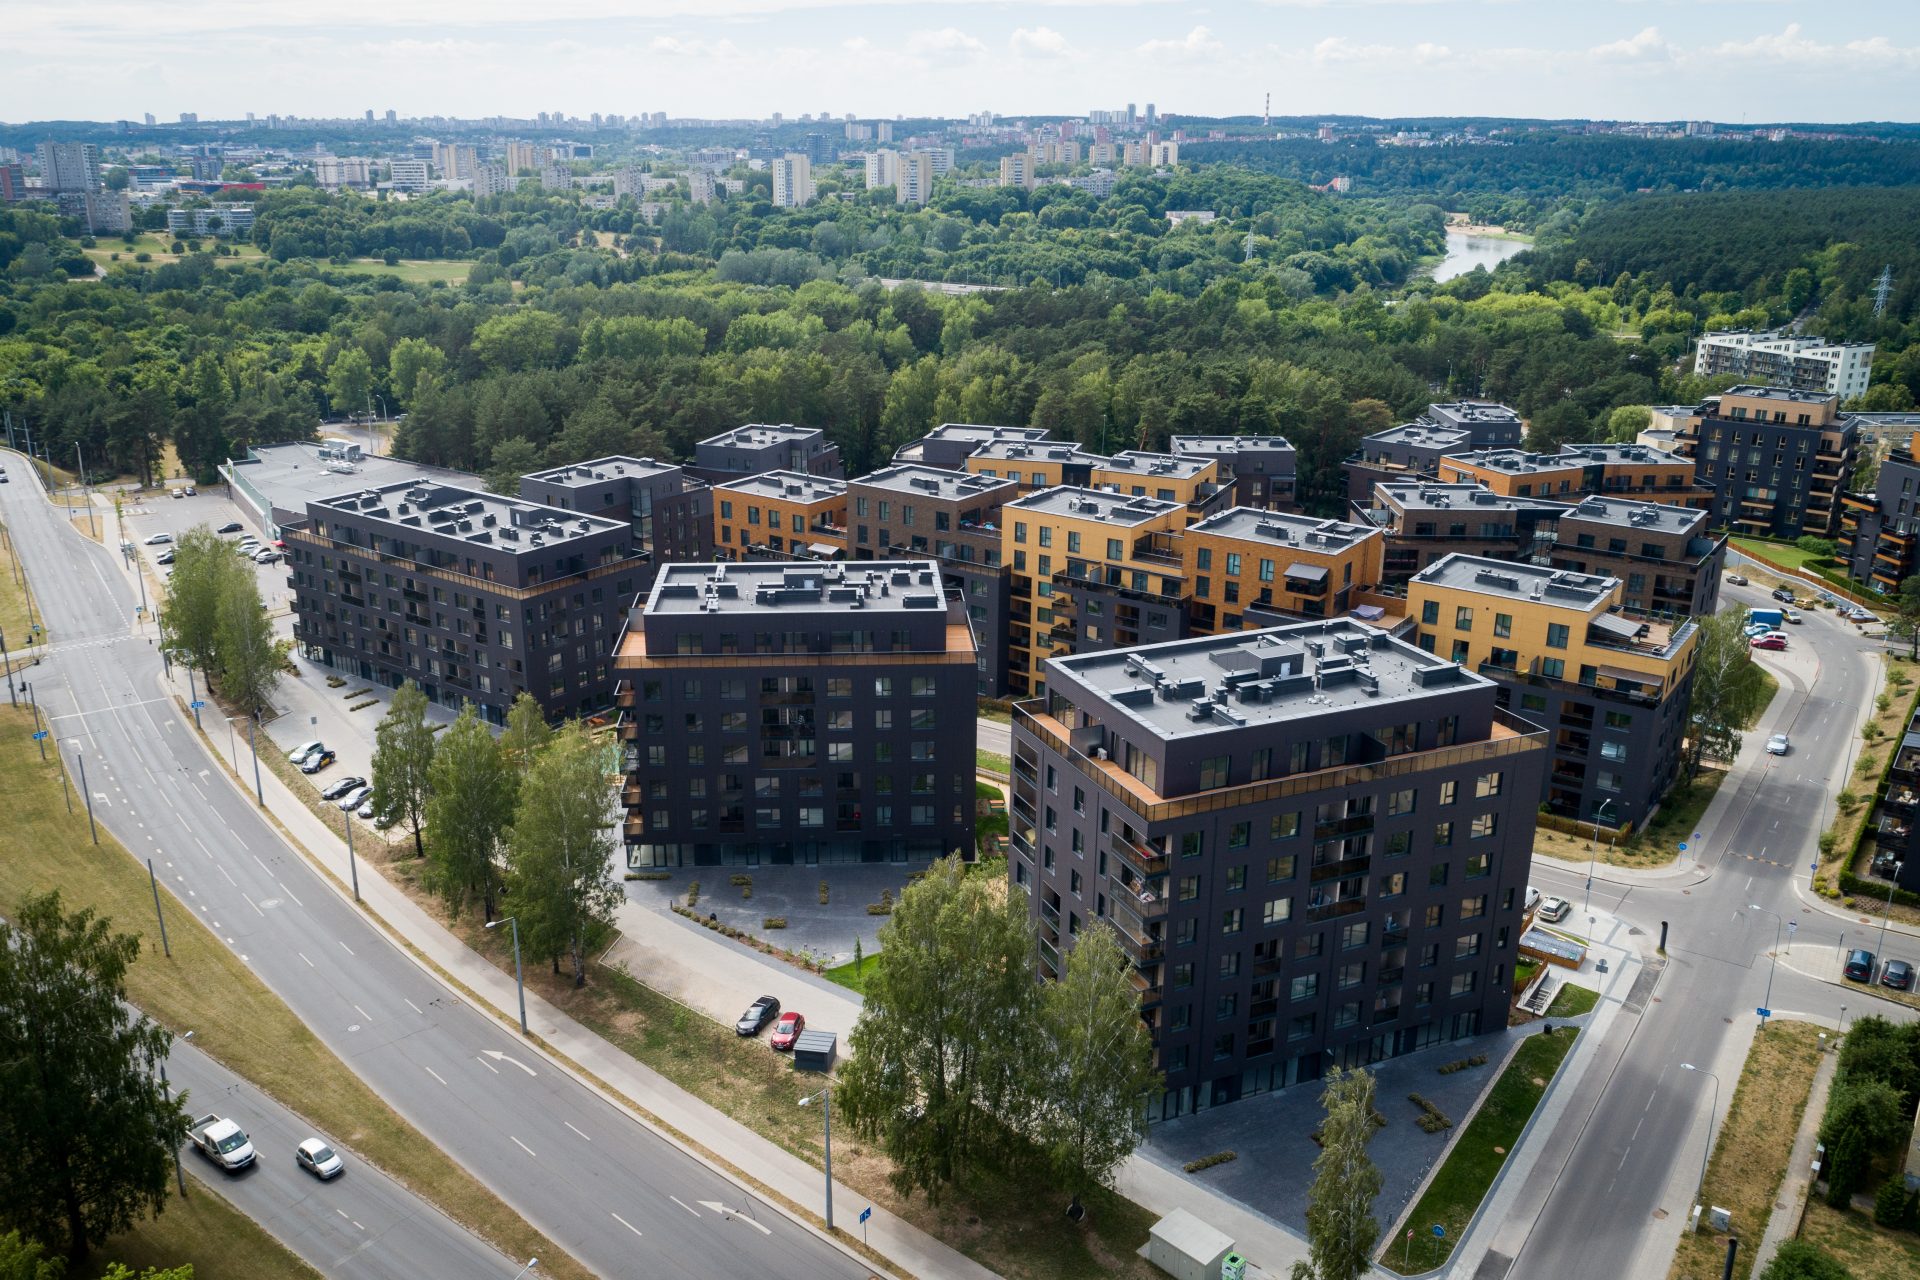 Construction of “Ąžuolų terasos”, Phase IV of the multi-apartment residential complex “Antakalnio terasos”